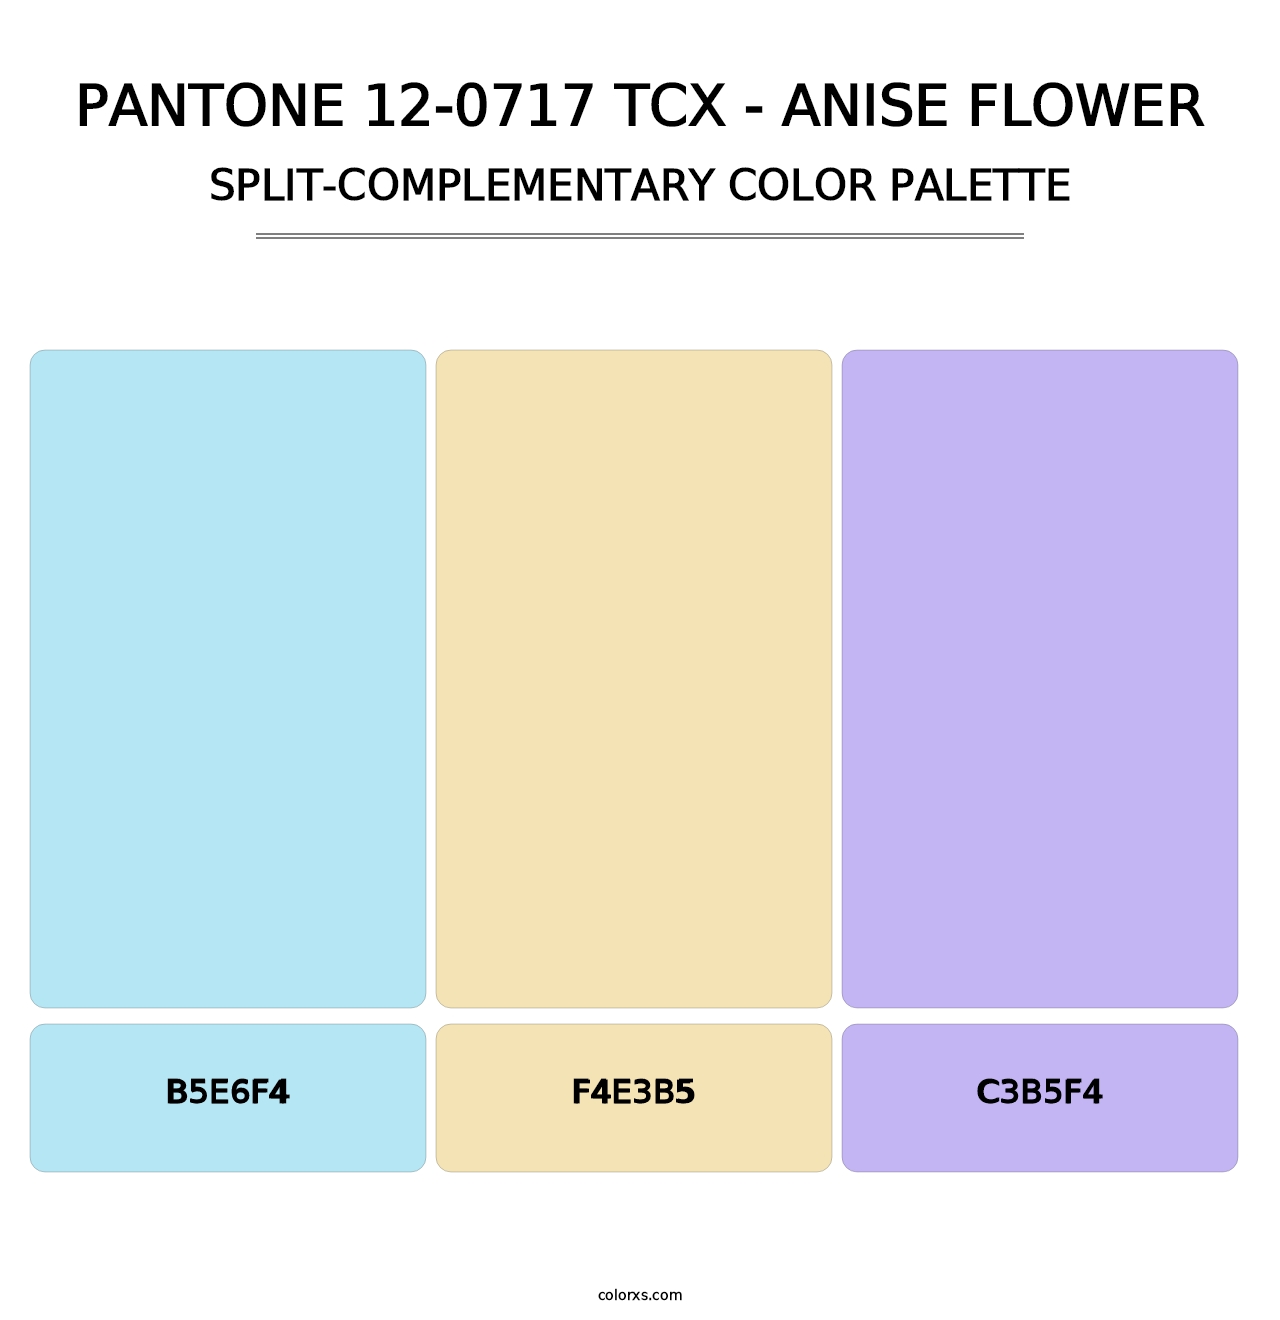 PANTONE 12-0717 TCX - Anise Flower - Split-Complementary Color Palette